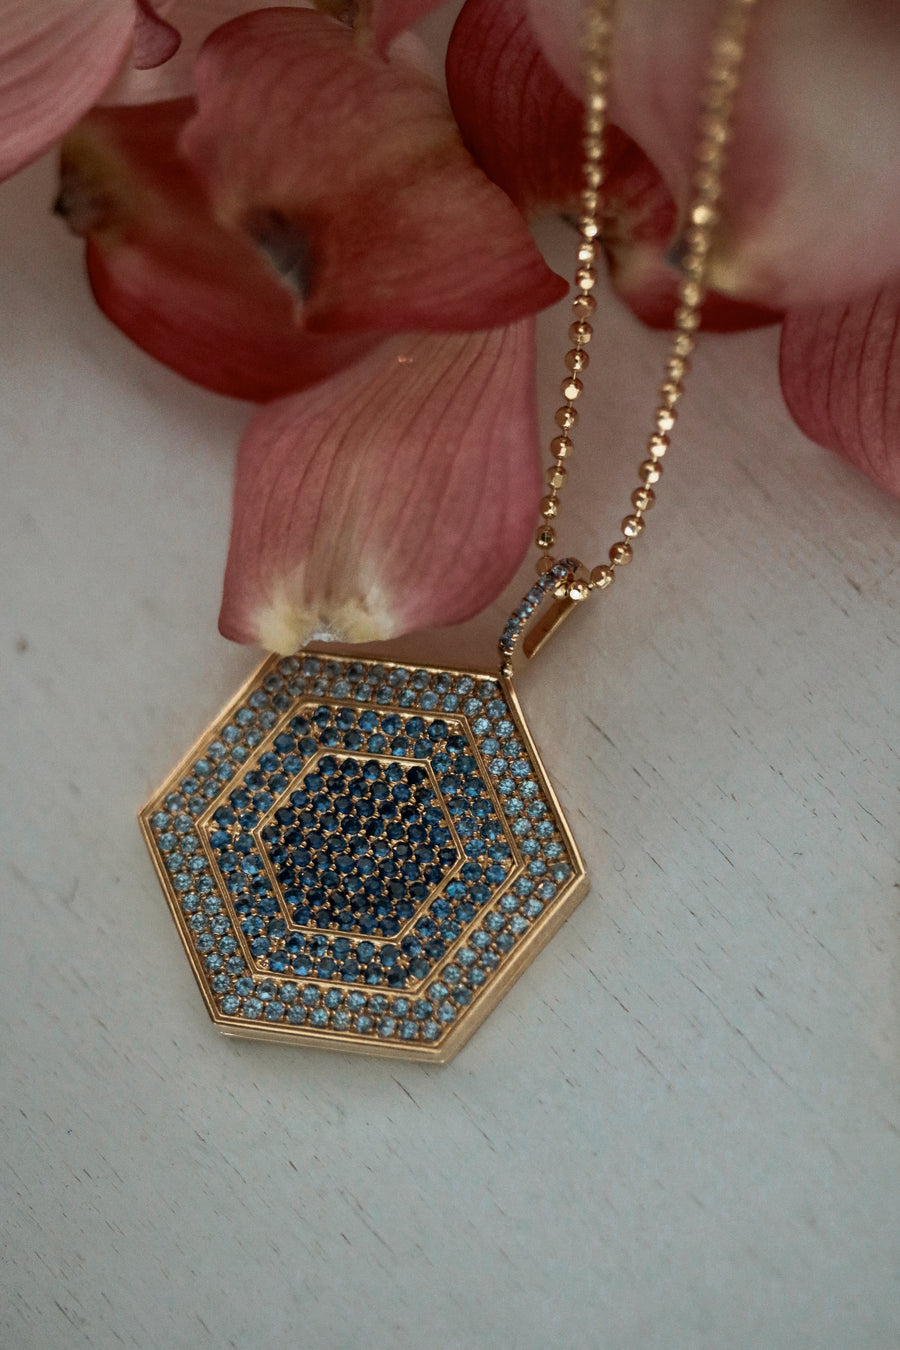 18k gold and blue sapphire hexagonal locket pendant